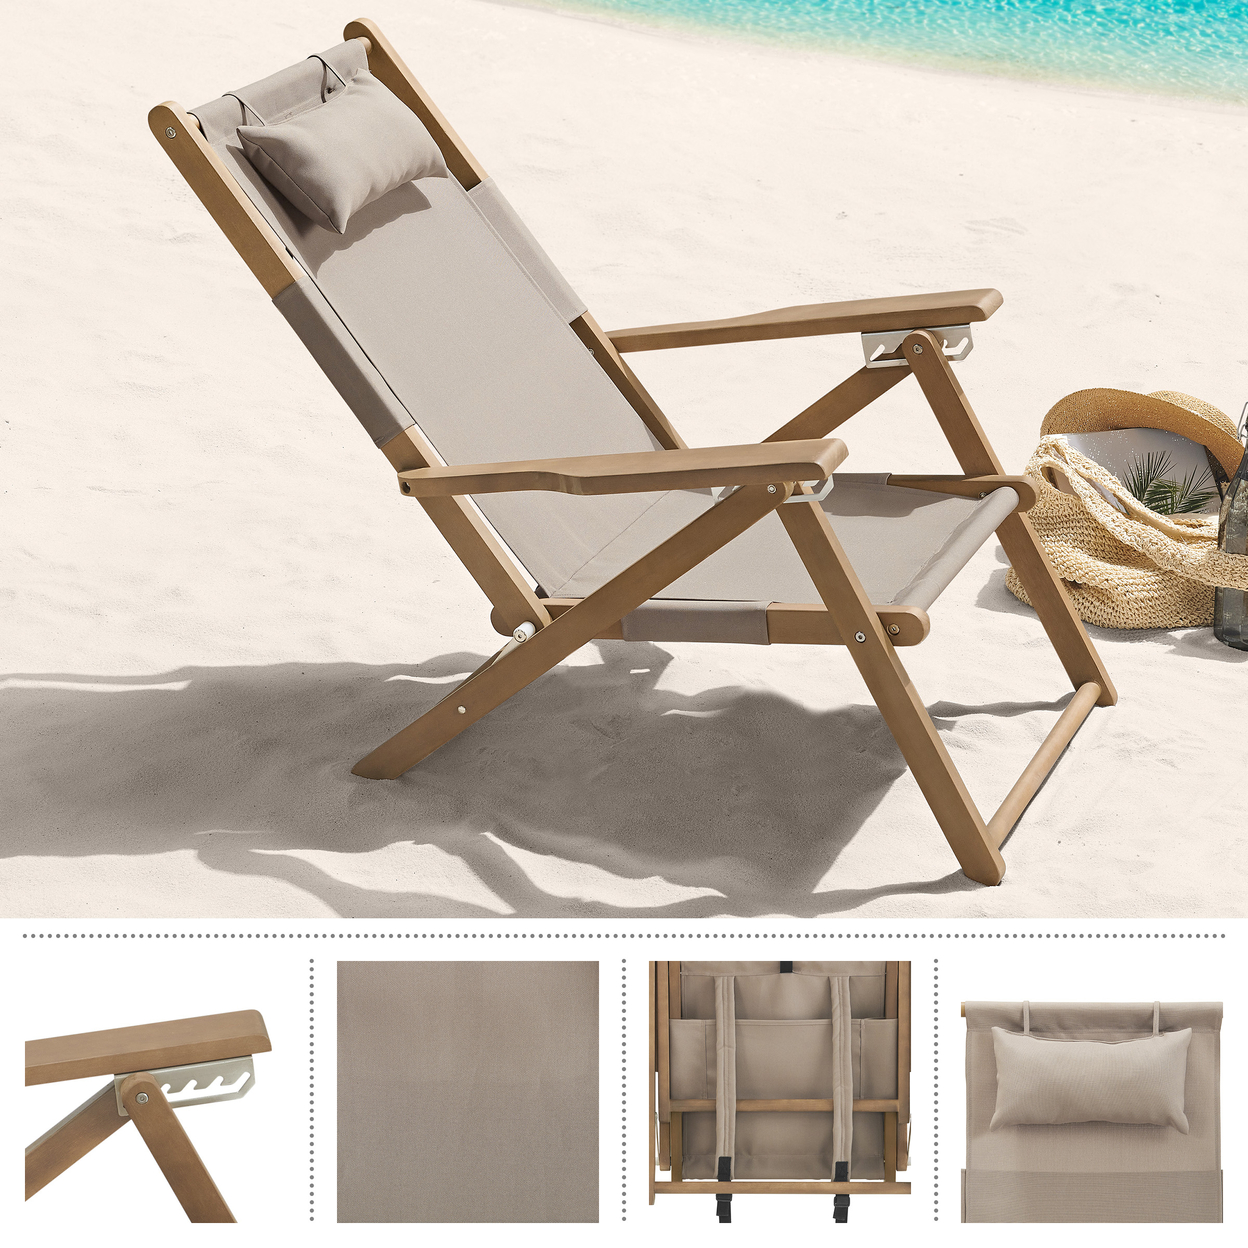 Wood Beach Chair Folding Backpack Straps, 4-Position Recline Beach Essentials